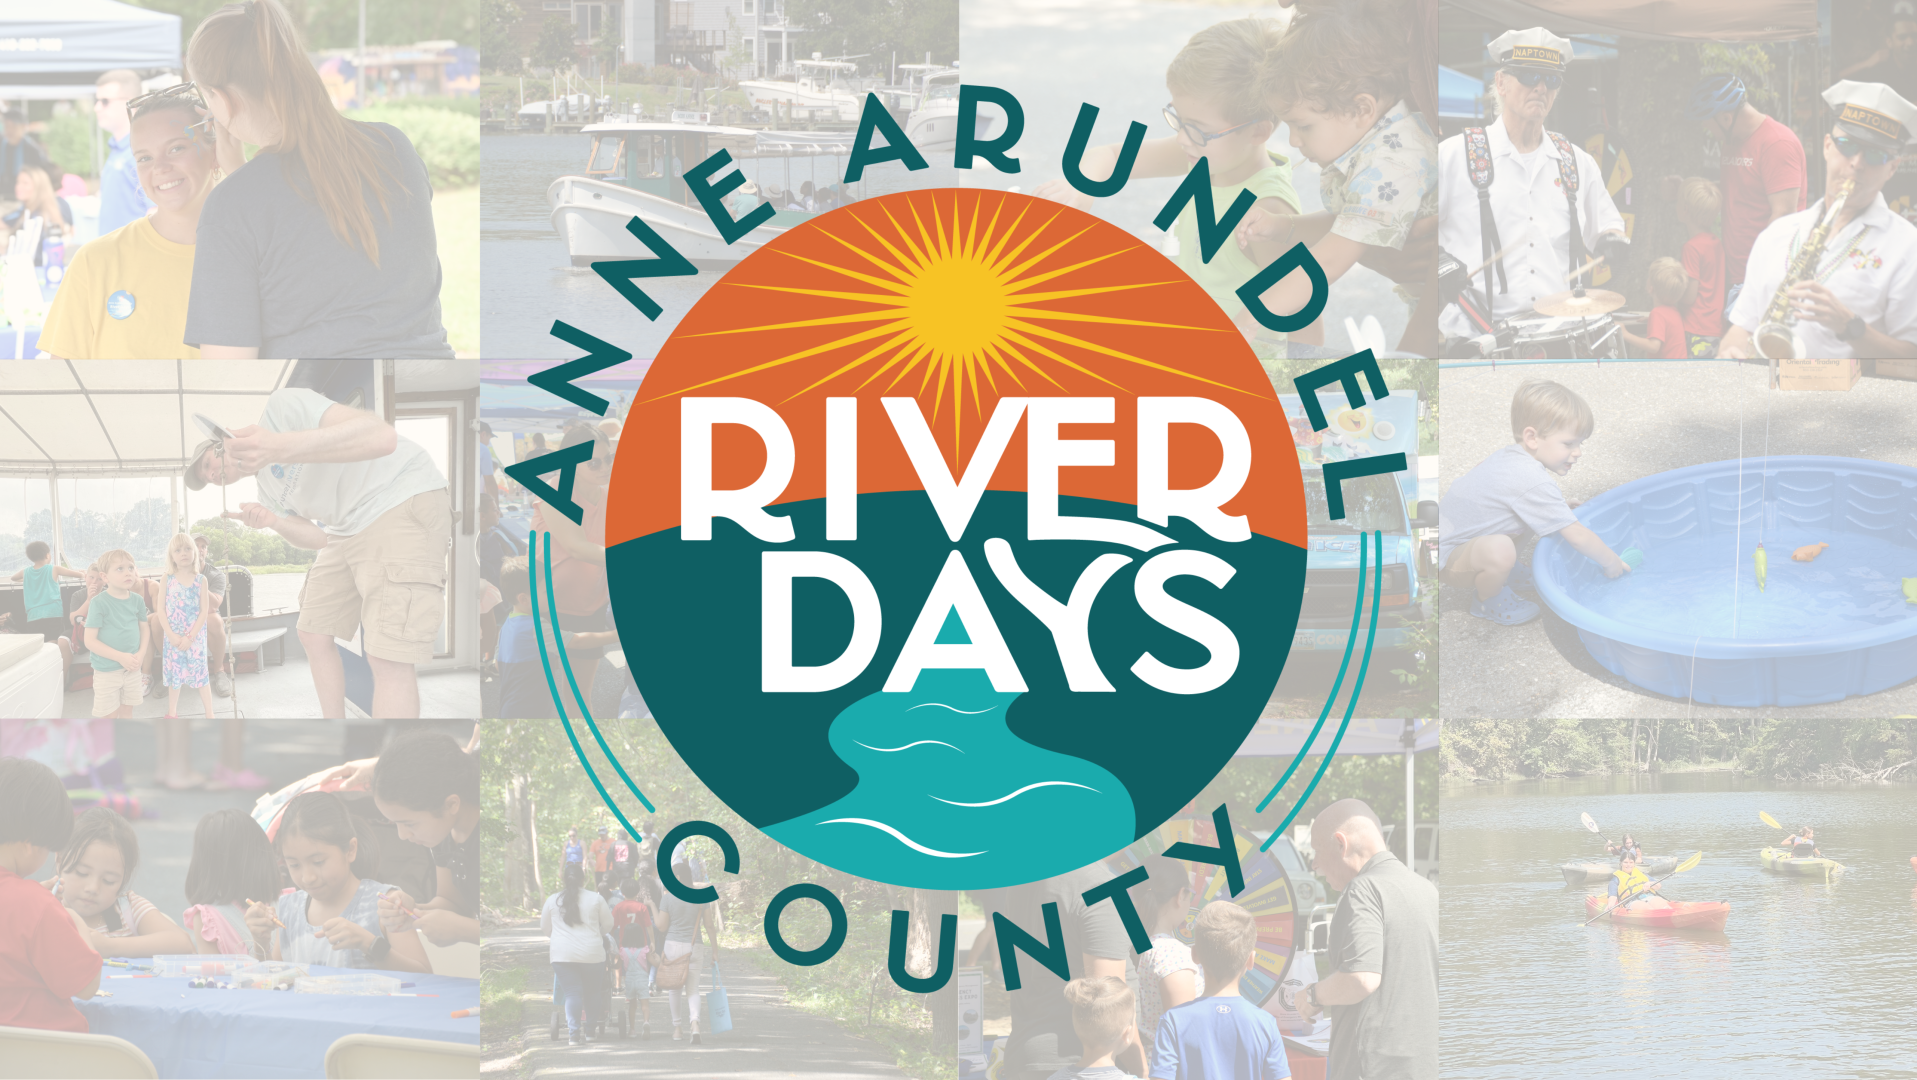 Anne Arundel County River Days logo